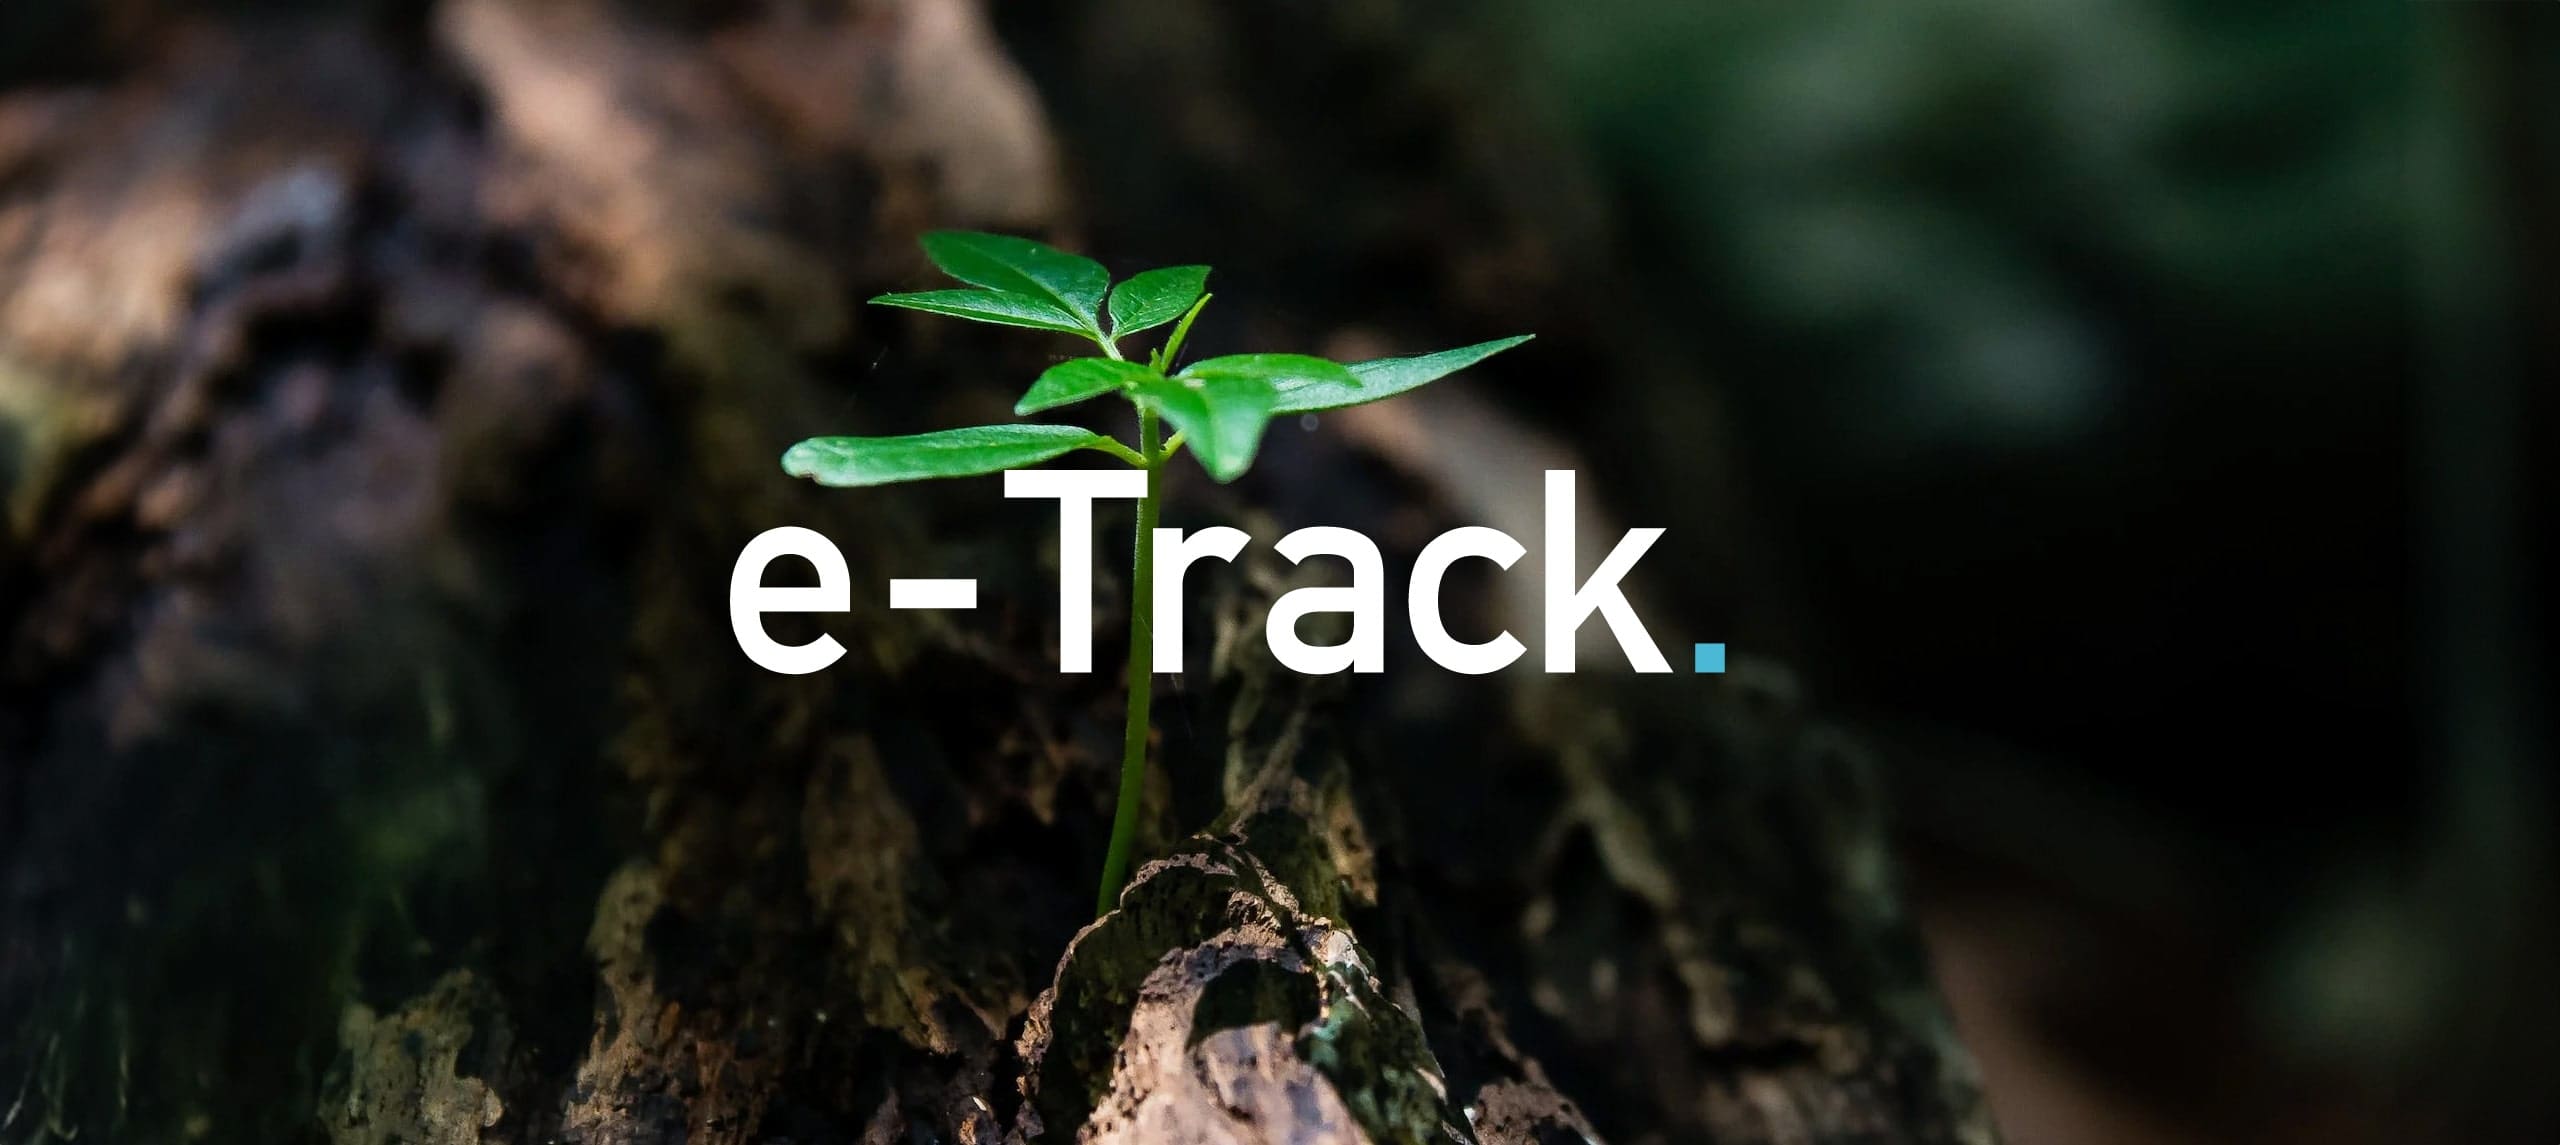 e-Track Electronic Key Systems - e-Track Logo | e-Track sustainability